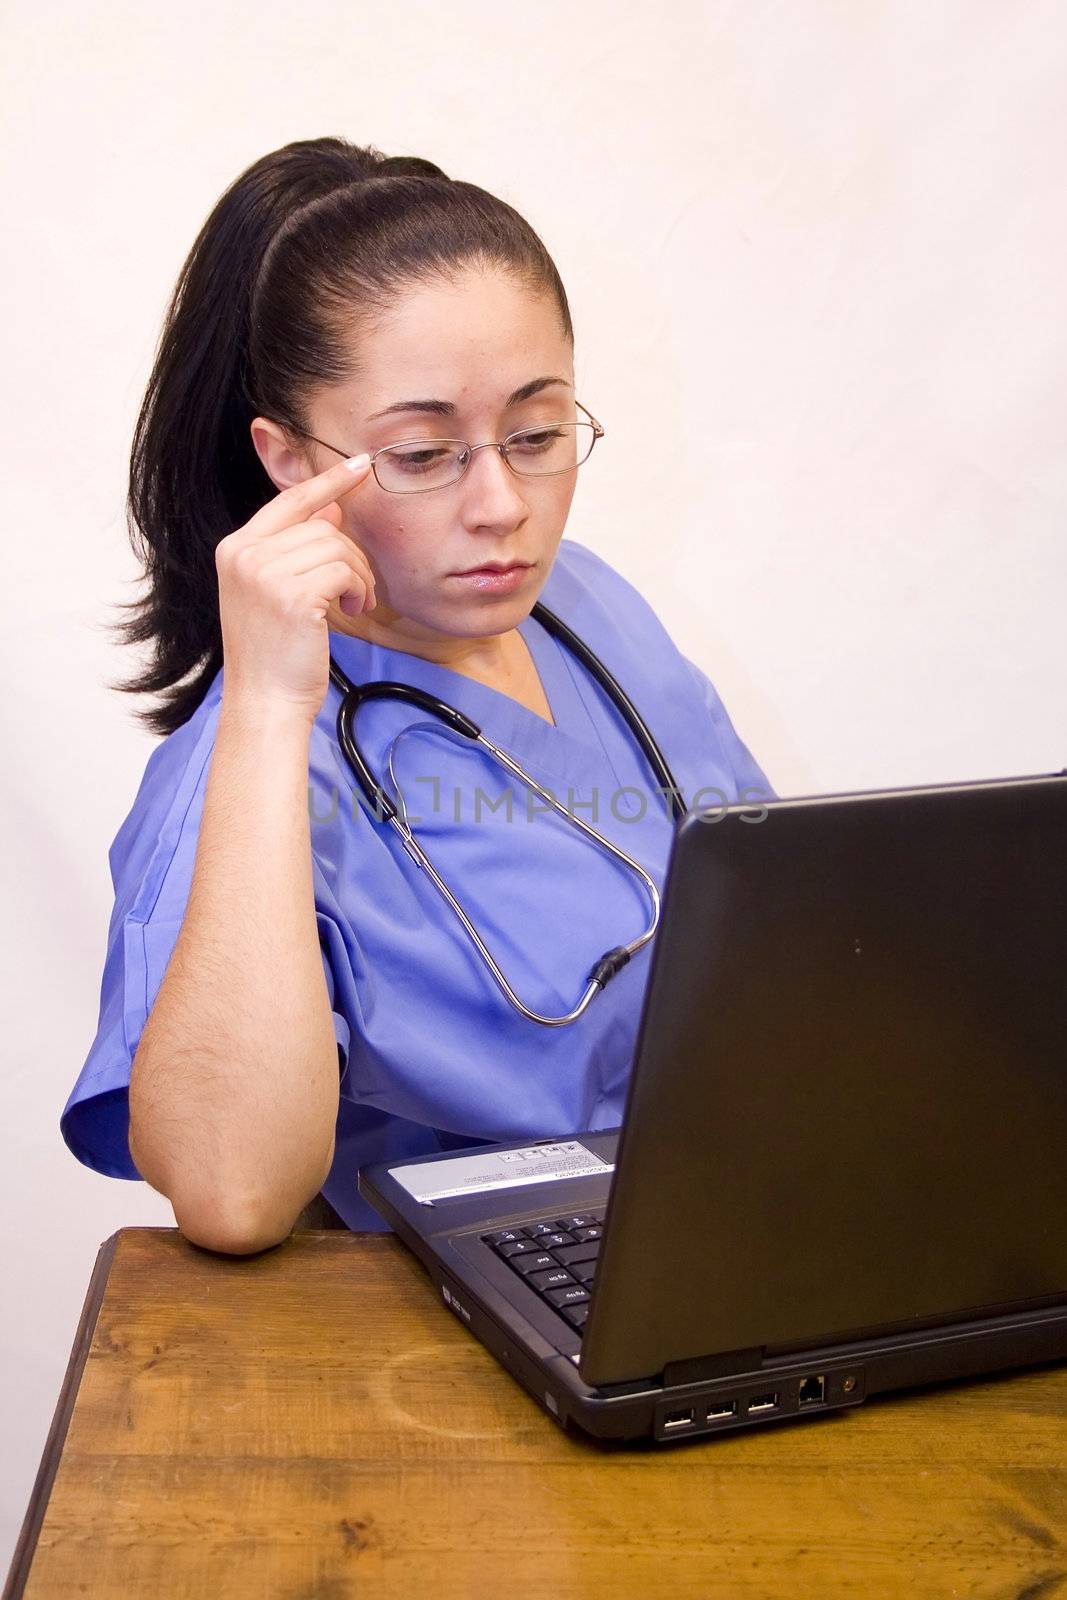 Pretty Hispanic nurse isolated on white with laptop